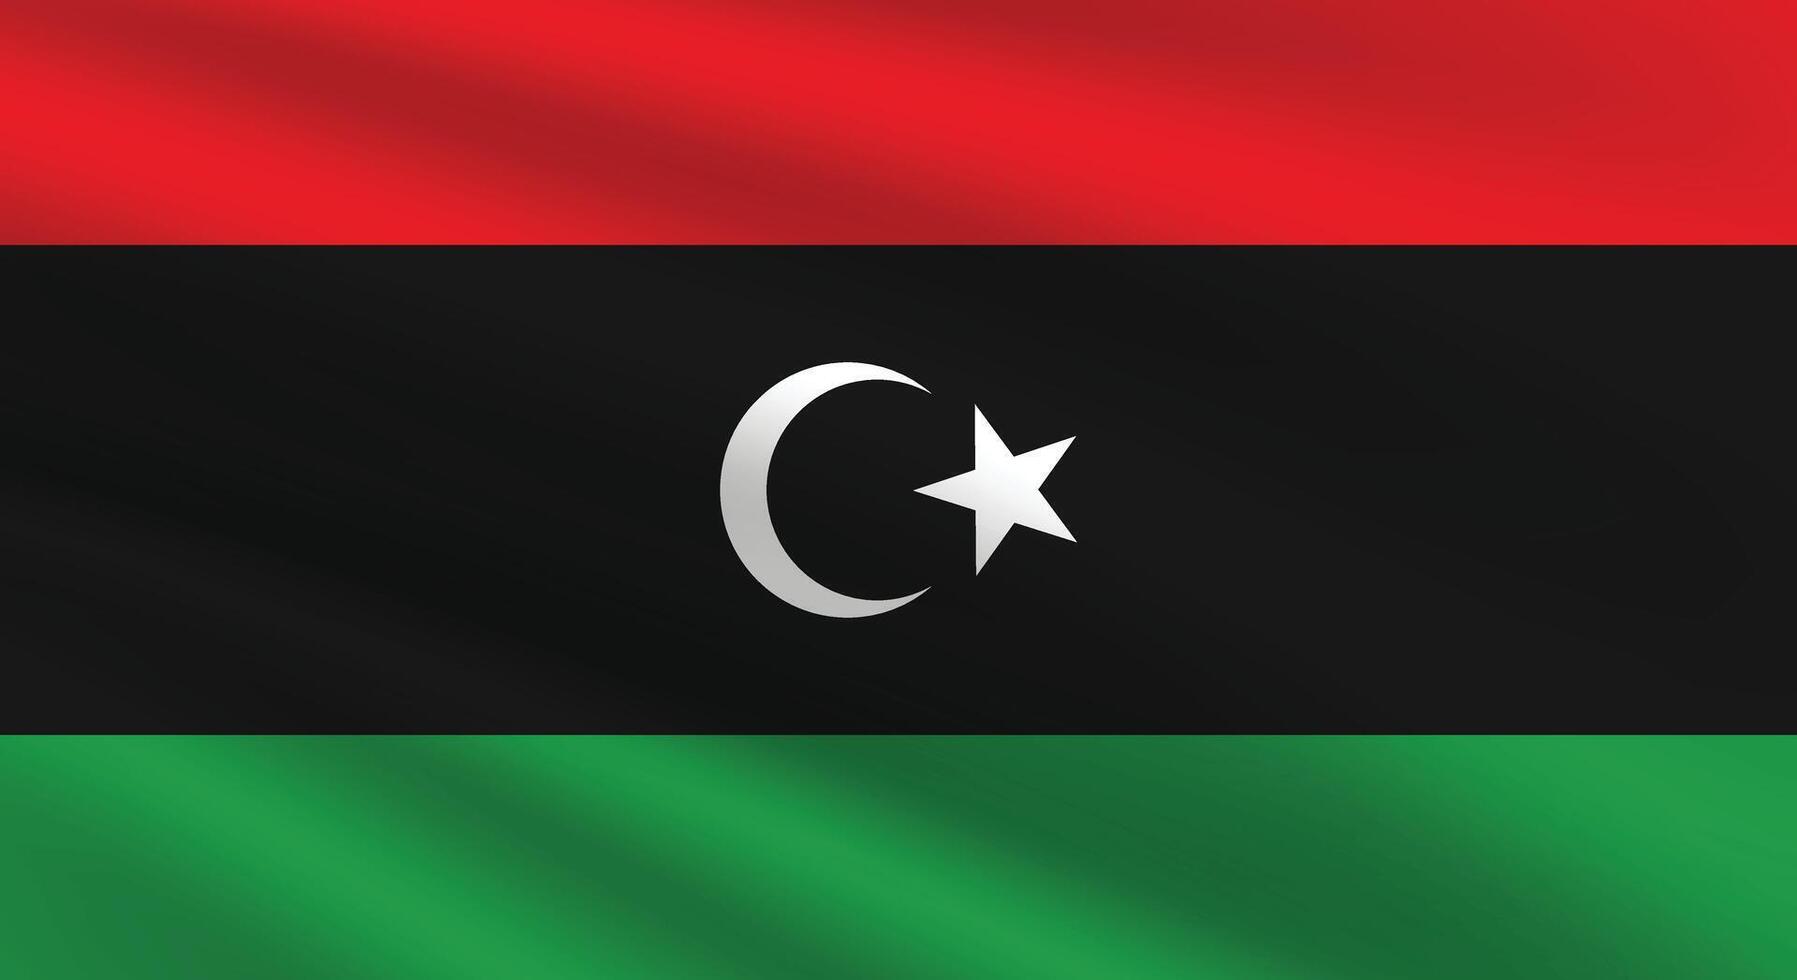 Libya flag illustration. Libya national flag. Waving Libya flag. vector